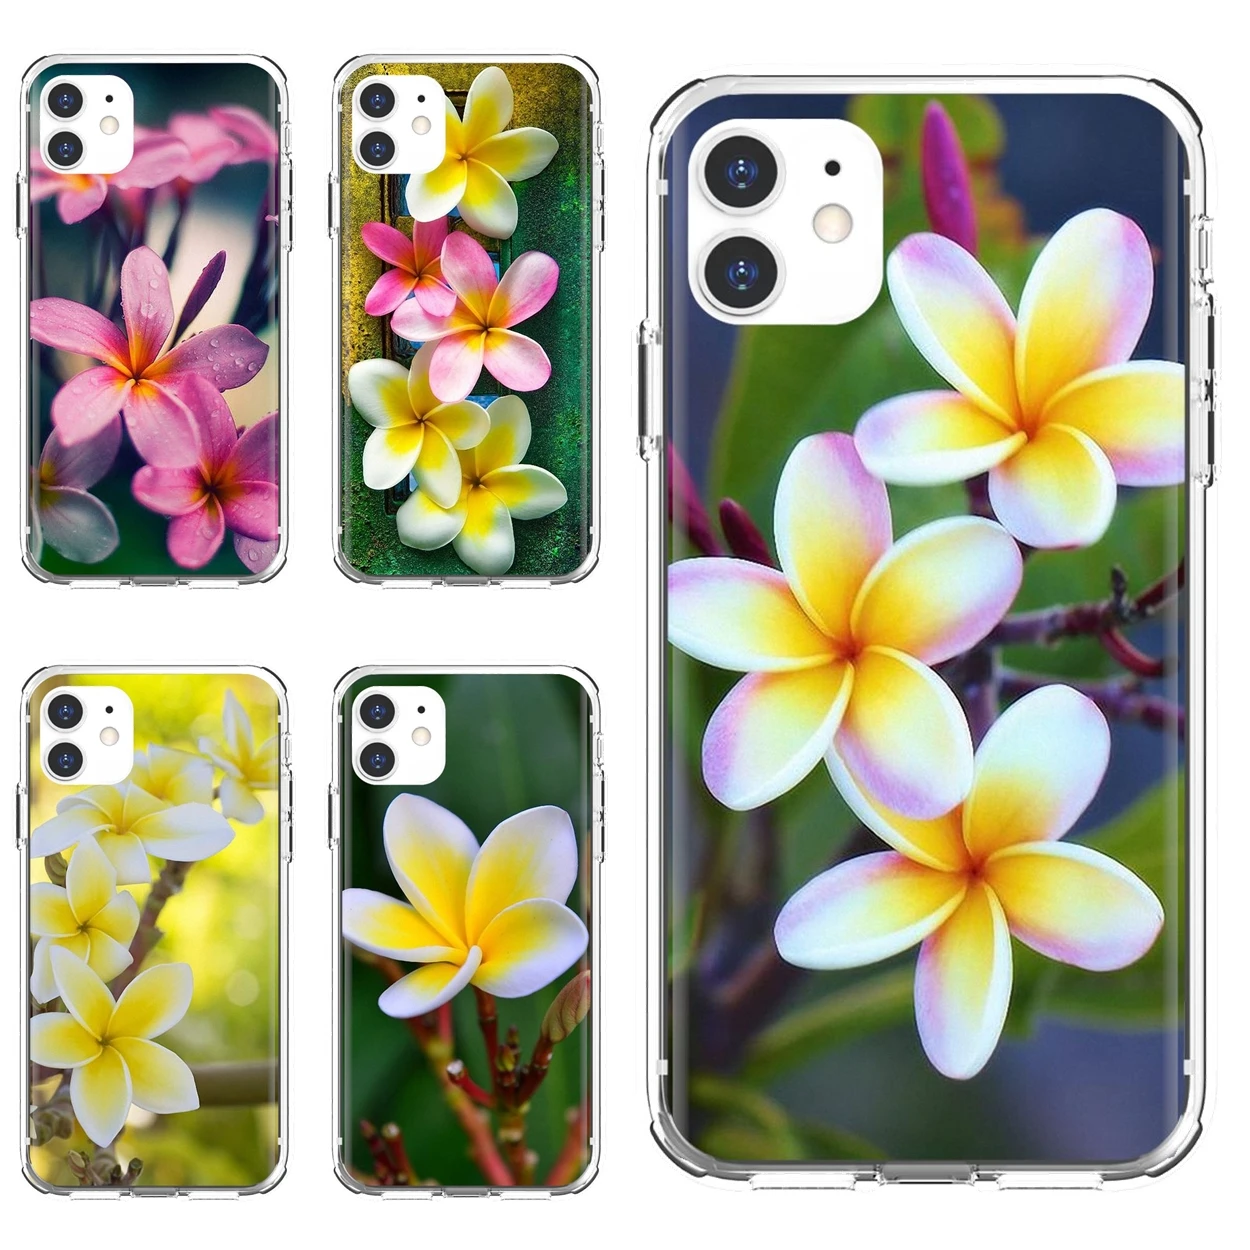 cute iphone 11 cases עבור iPhone 10 11 12 13 מיני פרו 4S 5S SE 5C 6 6S 7 8 X XR XS בתוספת מקסימום 2020 קבוצה של יפה פראנגיפאני פרחים רך תיק מקרה iphone xr wallet case